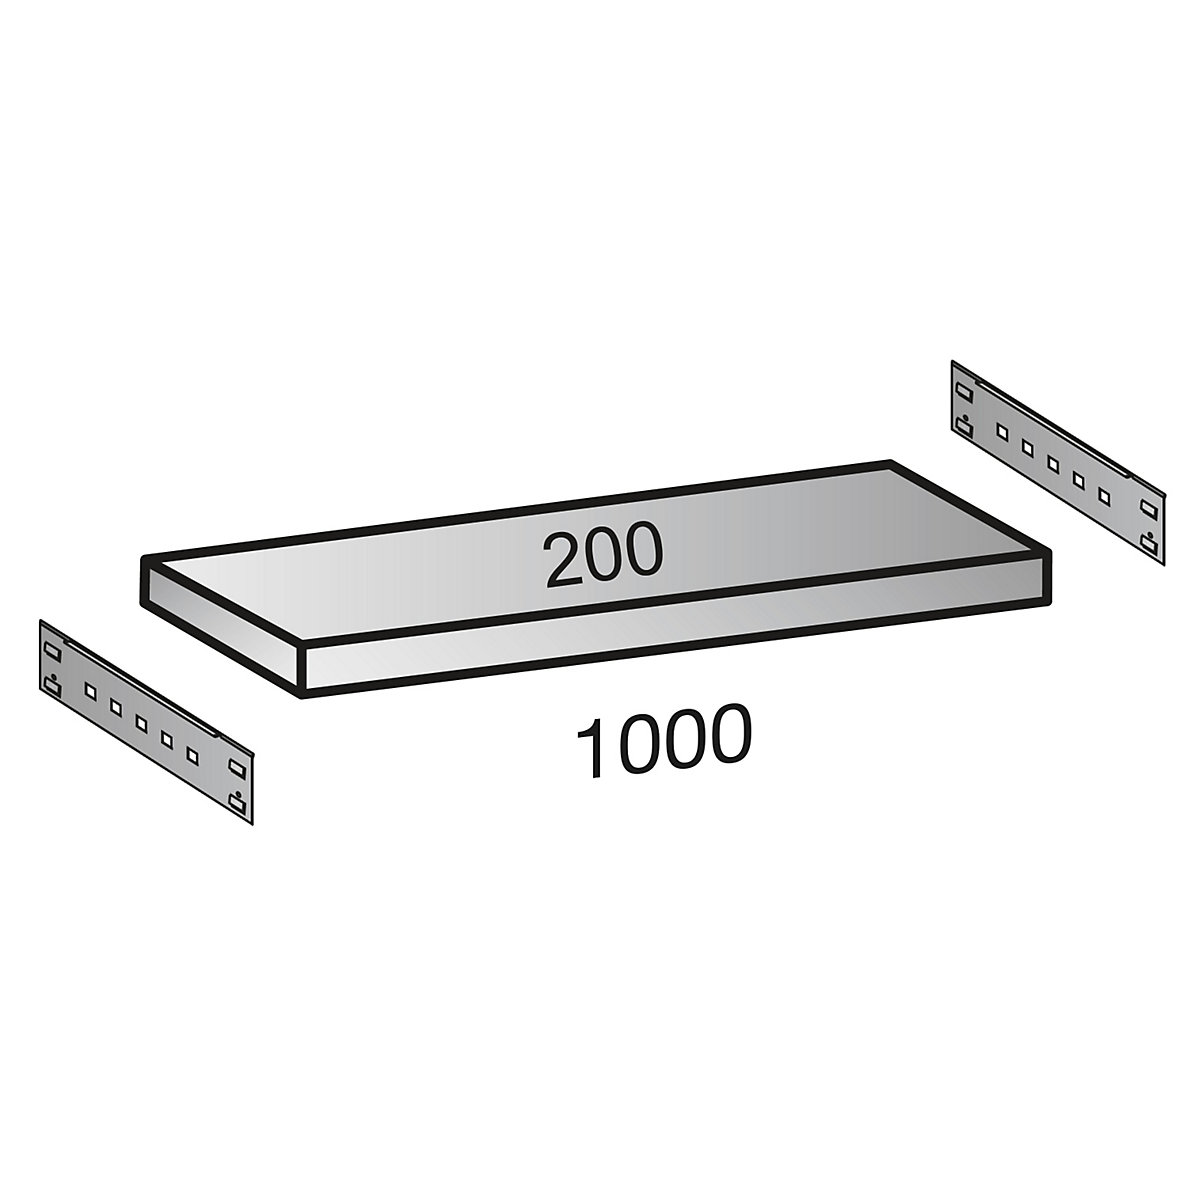 Shelf for industrial boltless shelf unit, shelf width 1000 mm, depth 200 mm